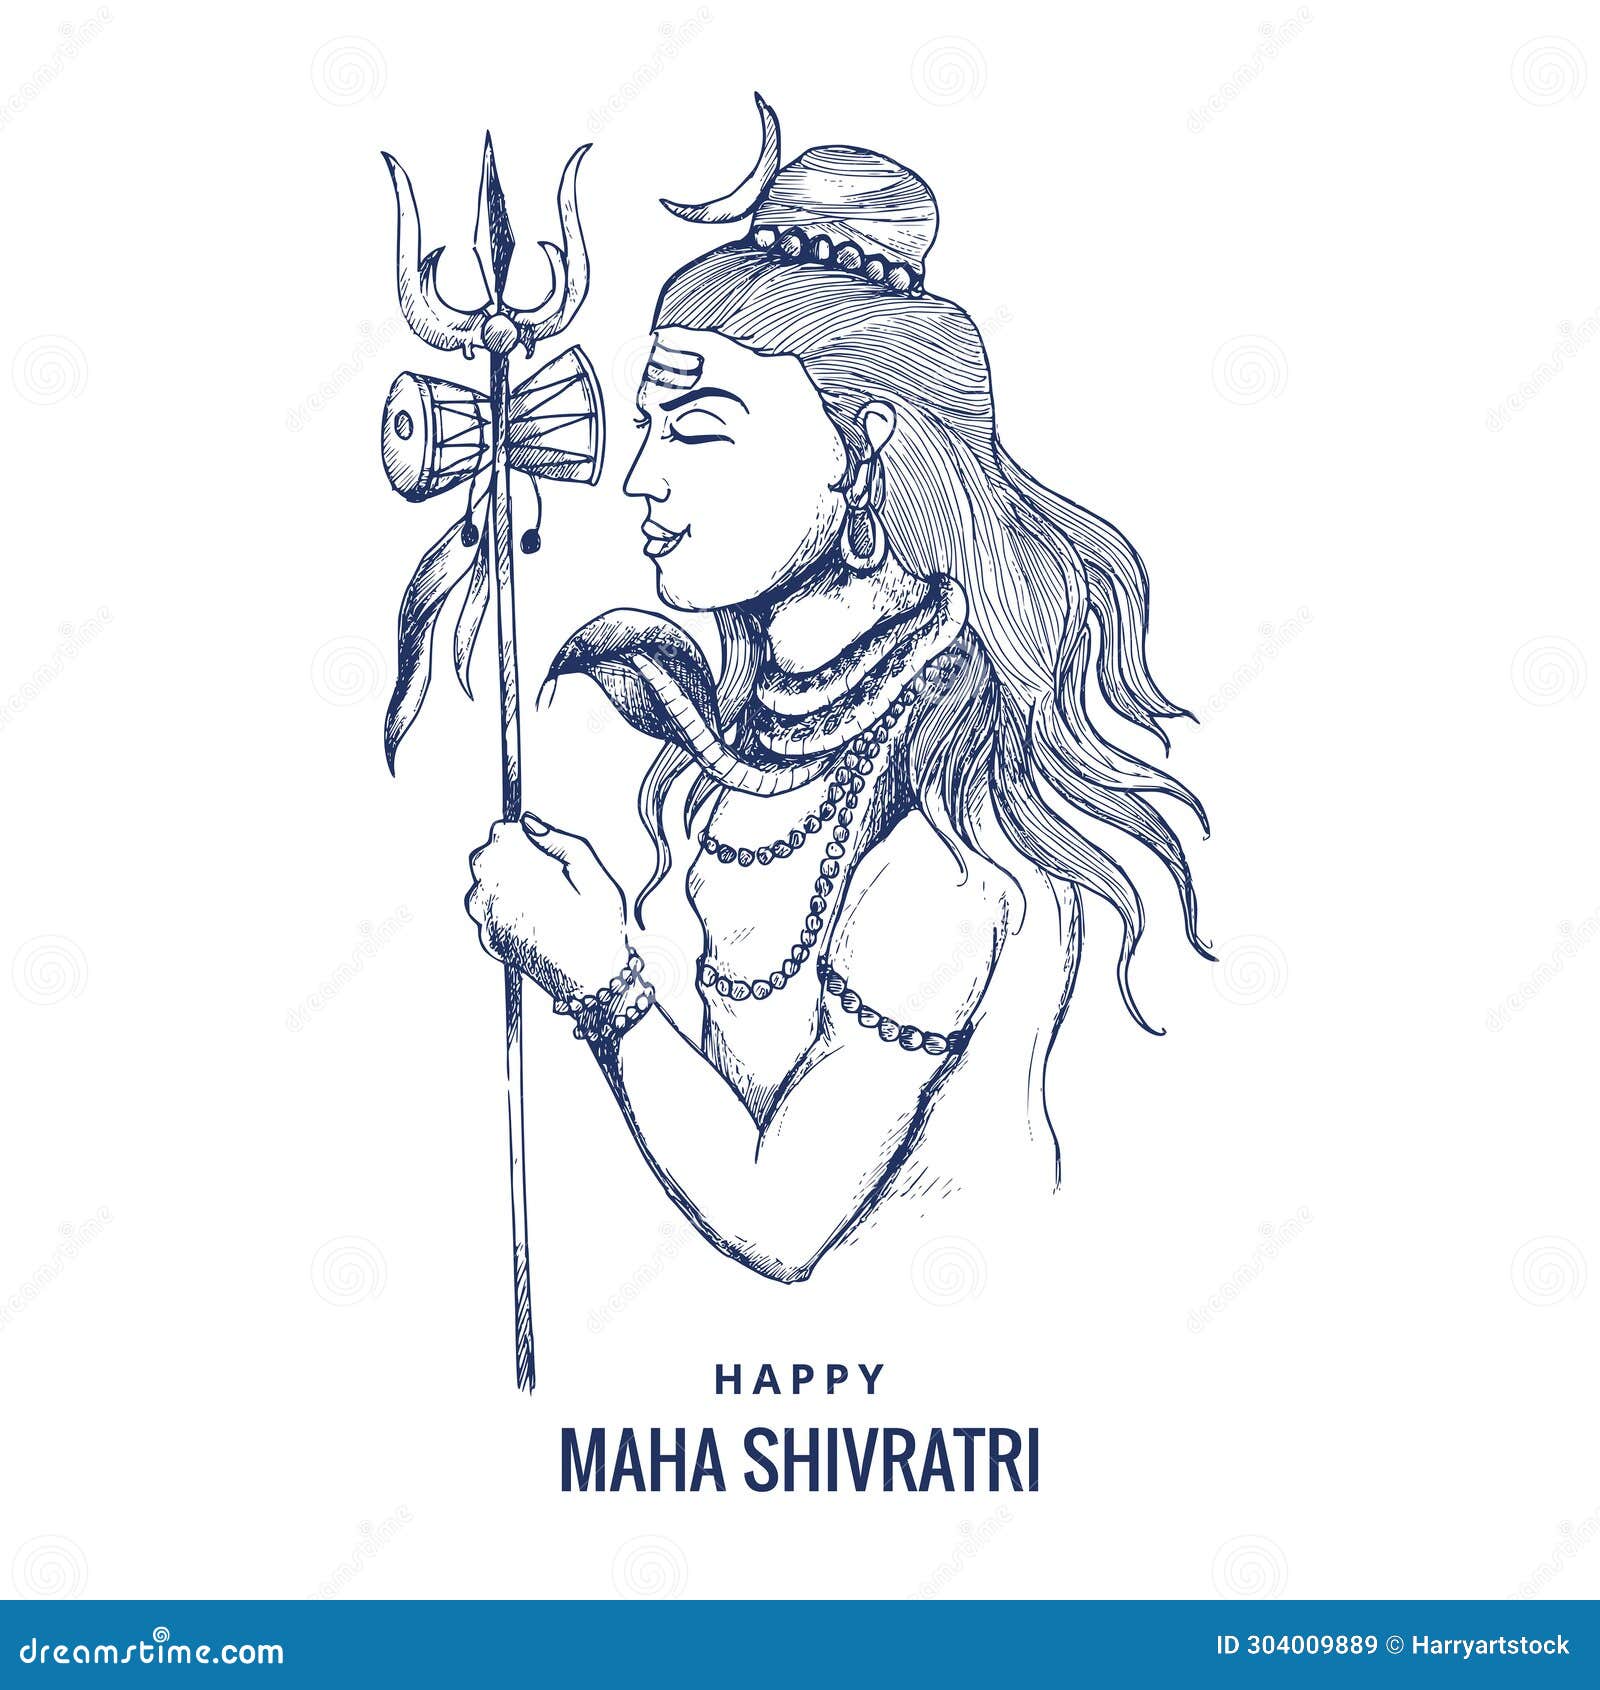 Free Vector | Mahadev shivratri festival greeting card design | Shiva,  Vector free, Card design